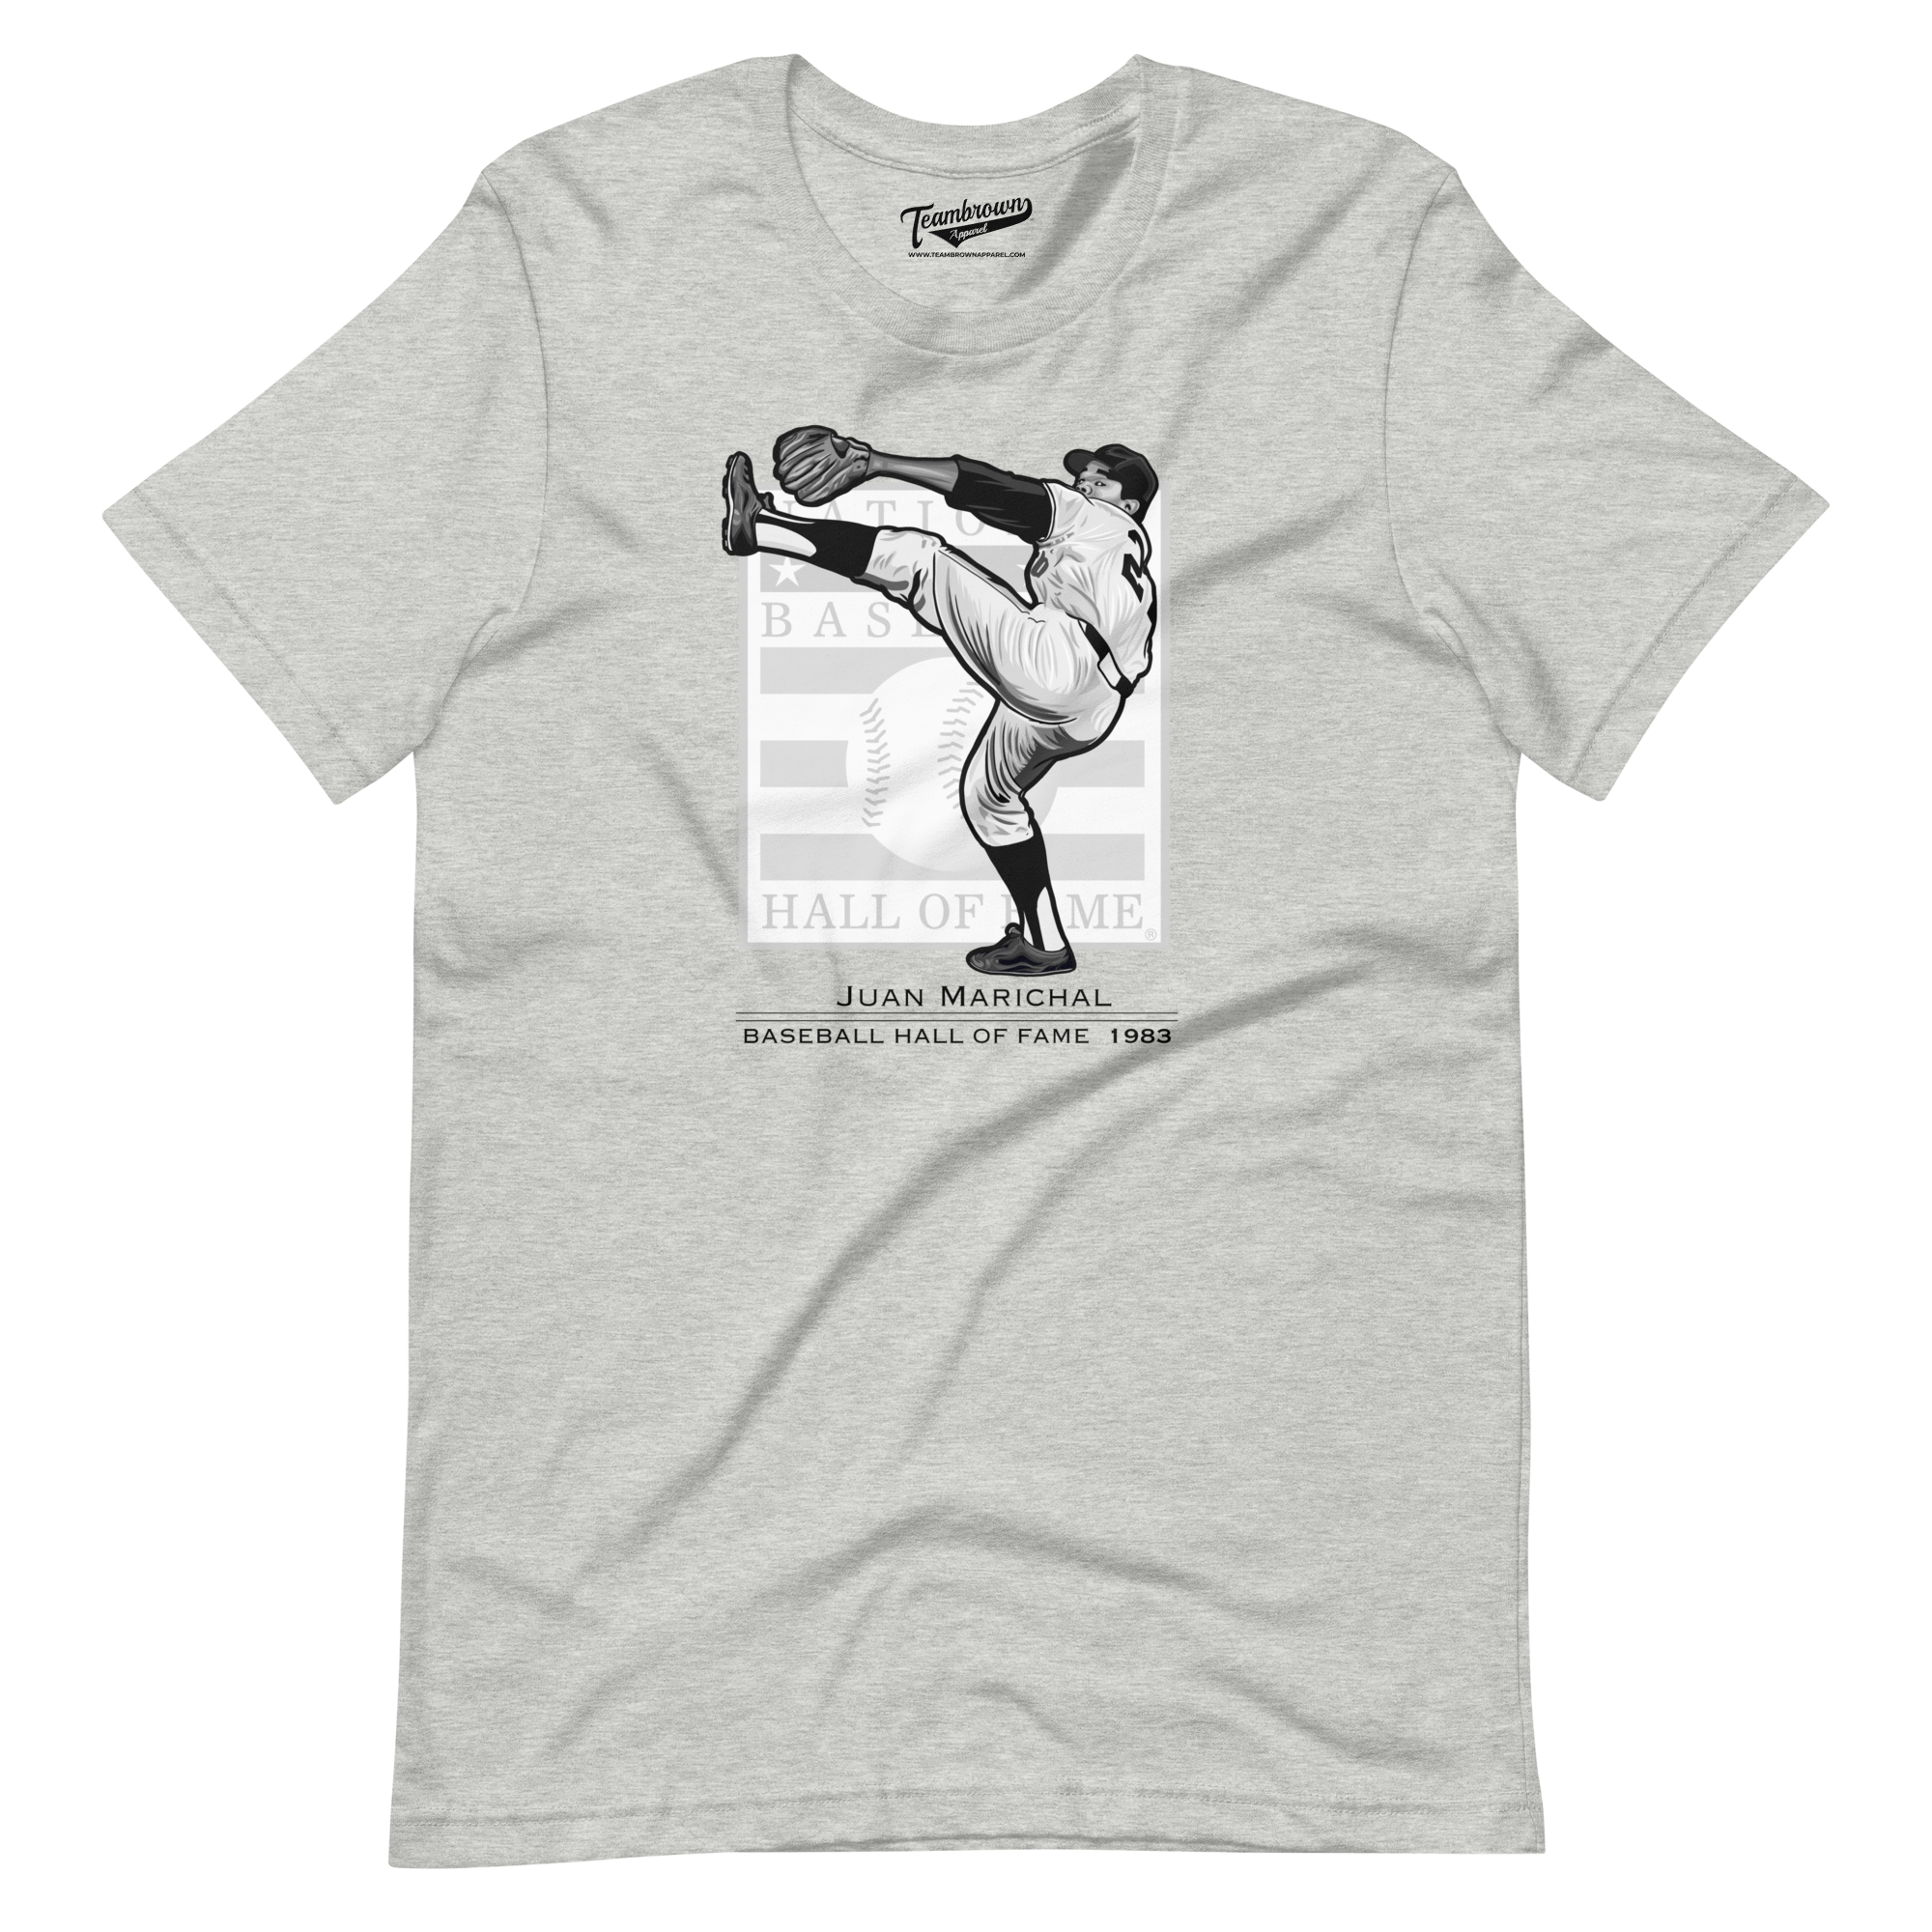 Baseball Hall of Fame Members - Juan Marichal - Unisex T-Shirt